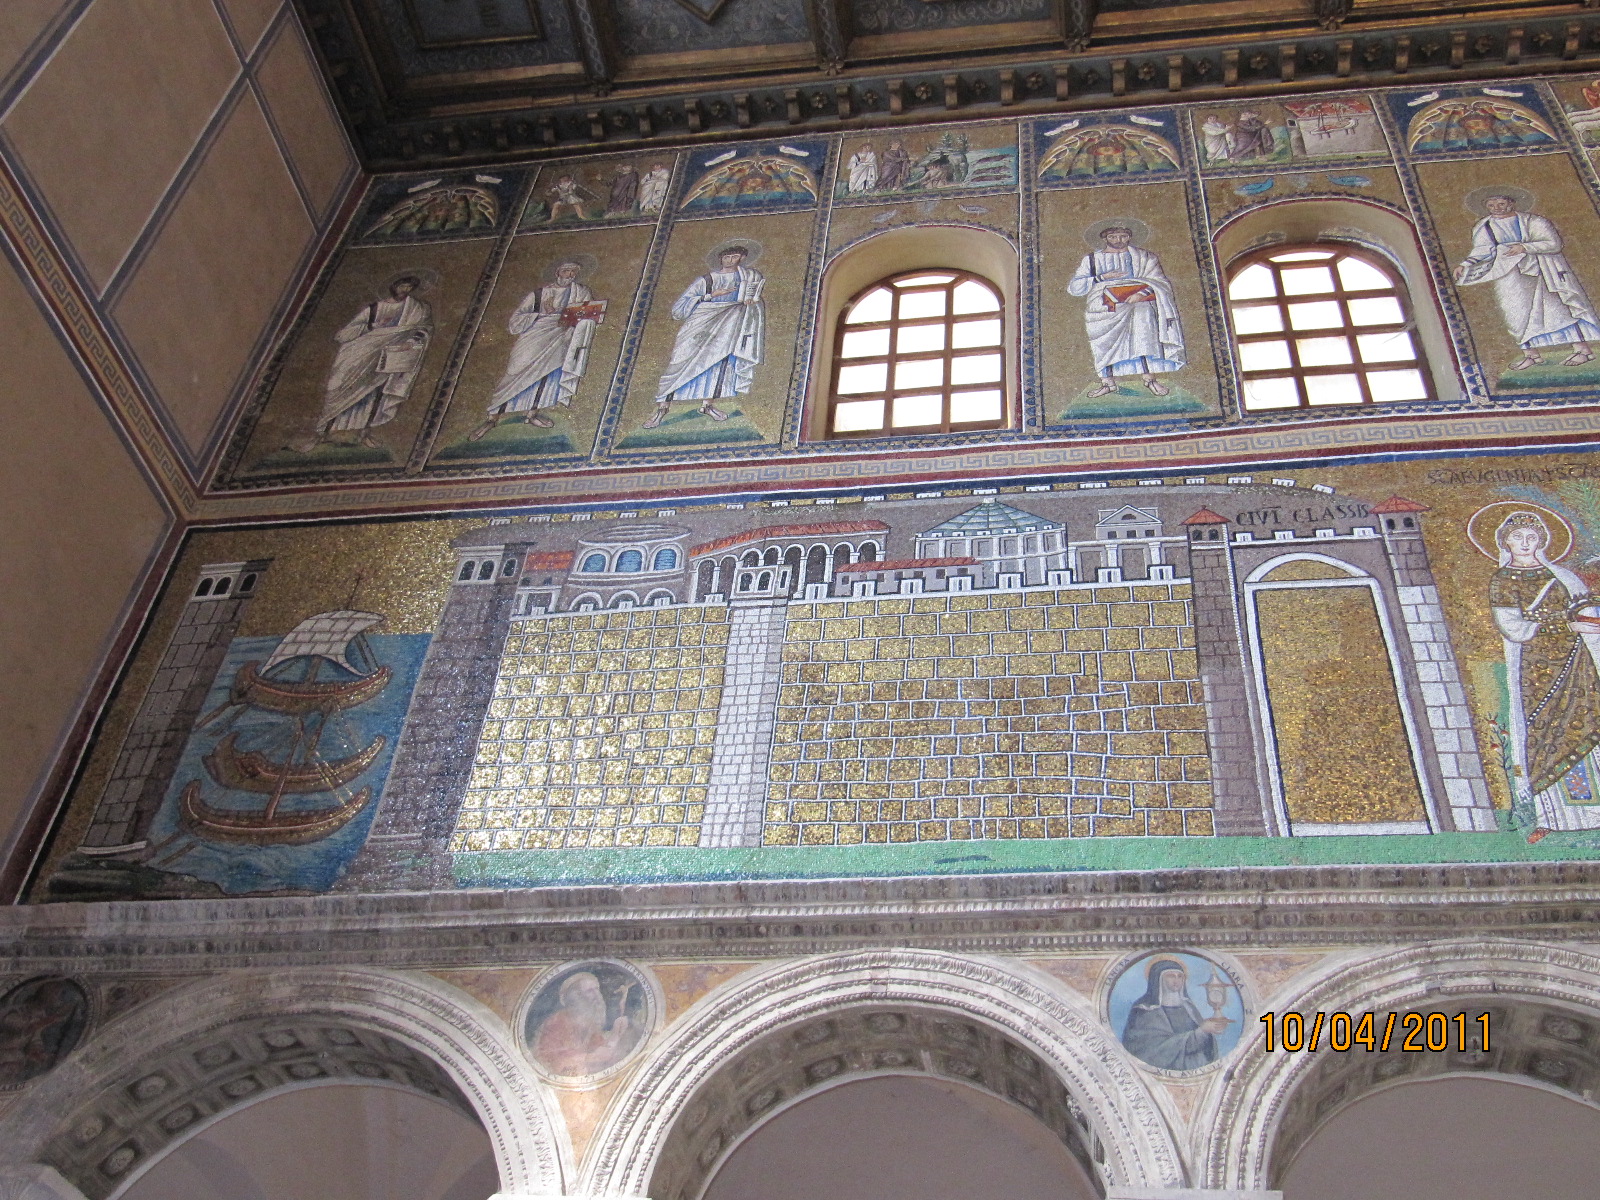 photo: https://upload.wikimedia.org/wikipedia/commons/d/d3/Basilica_Sant%27Apollinare_Nuovo_-_parte_sinistra.jpg